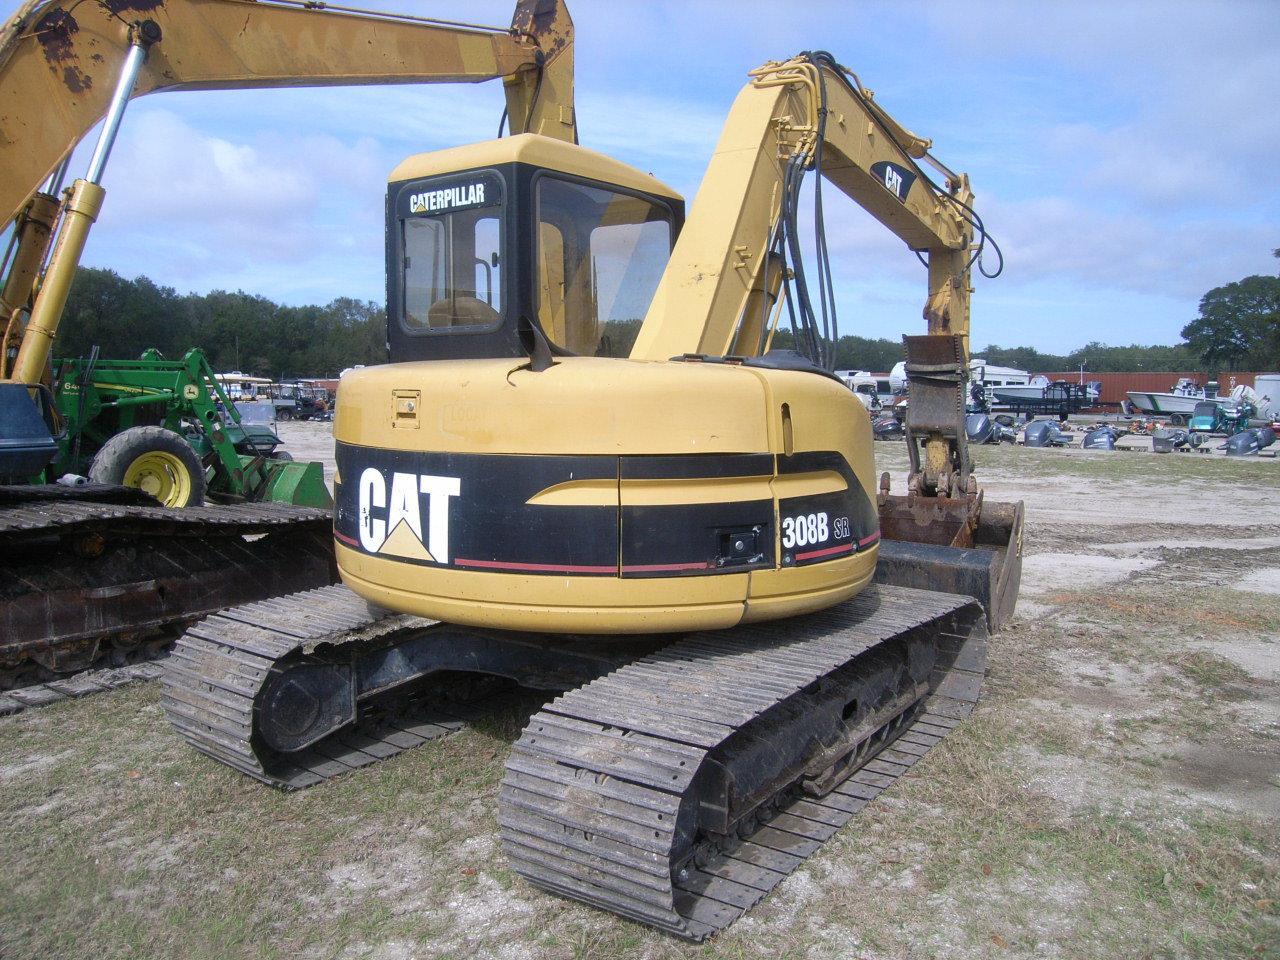 2-01192 (Equip.-Excavator)  Seller:Private/Dealer CAT 308B-SR TRACK EXCAVATOR WITH EXTRA